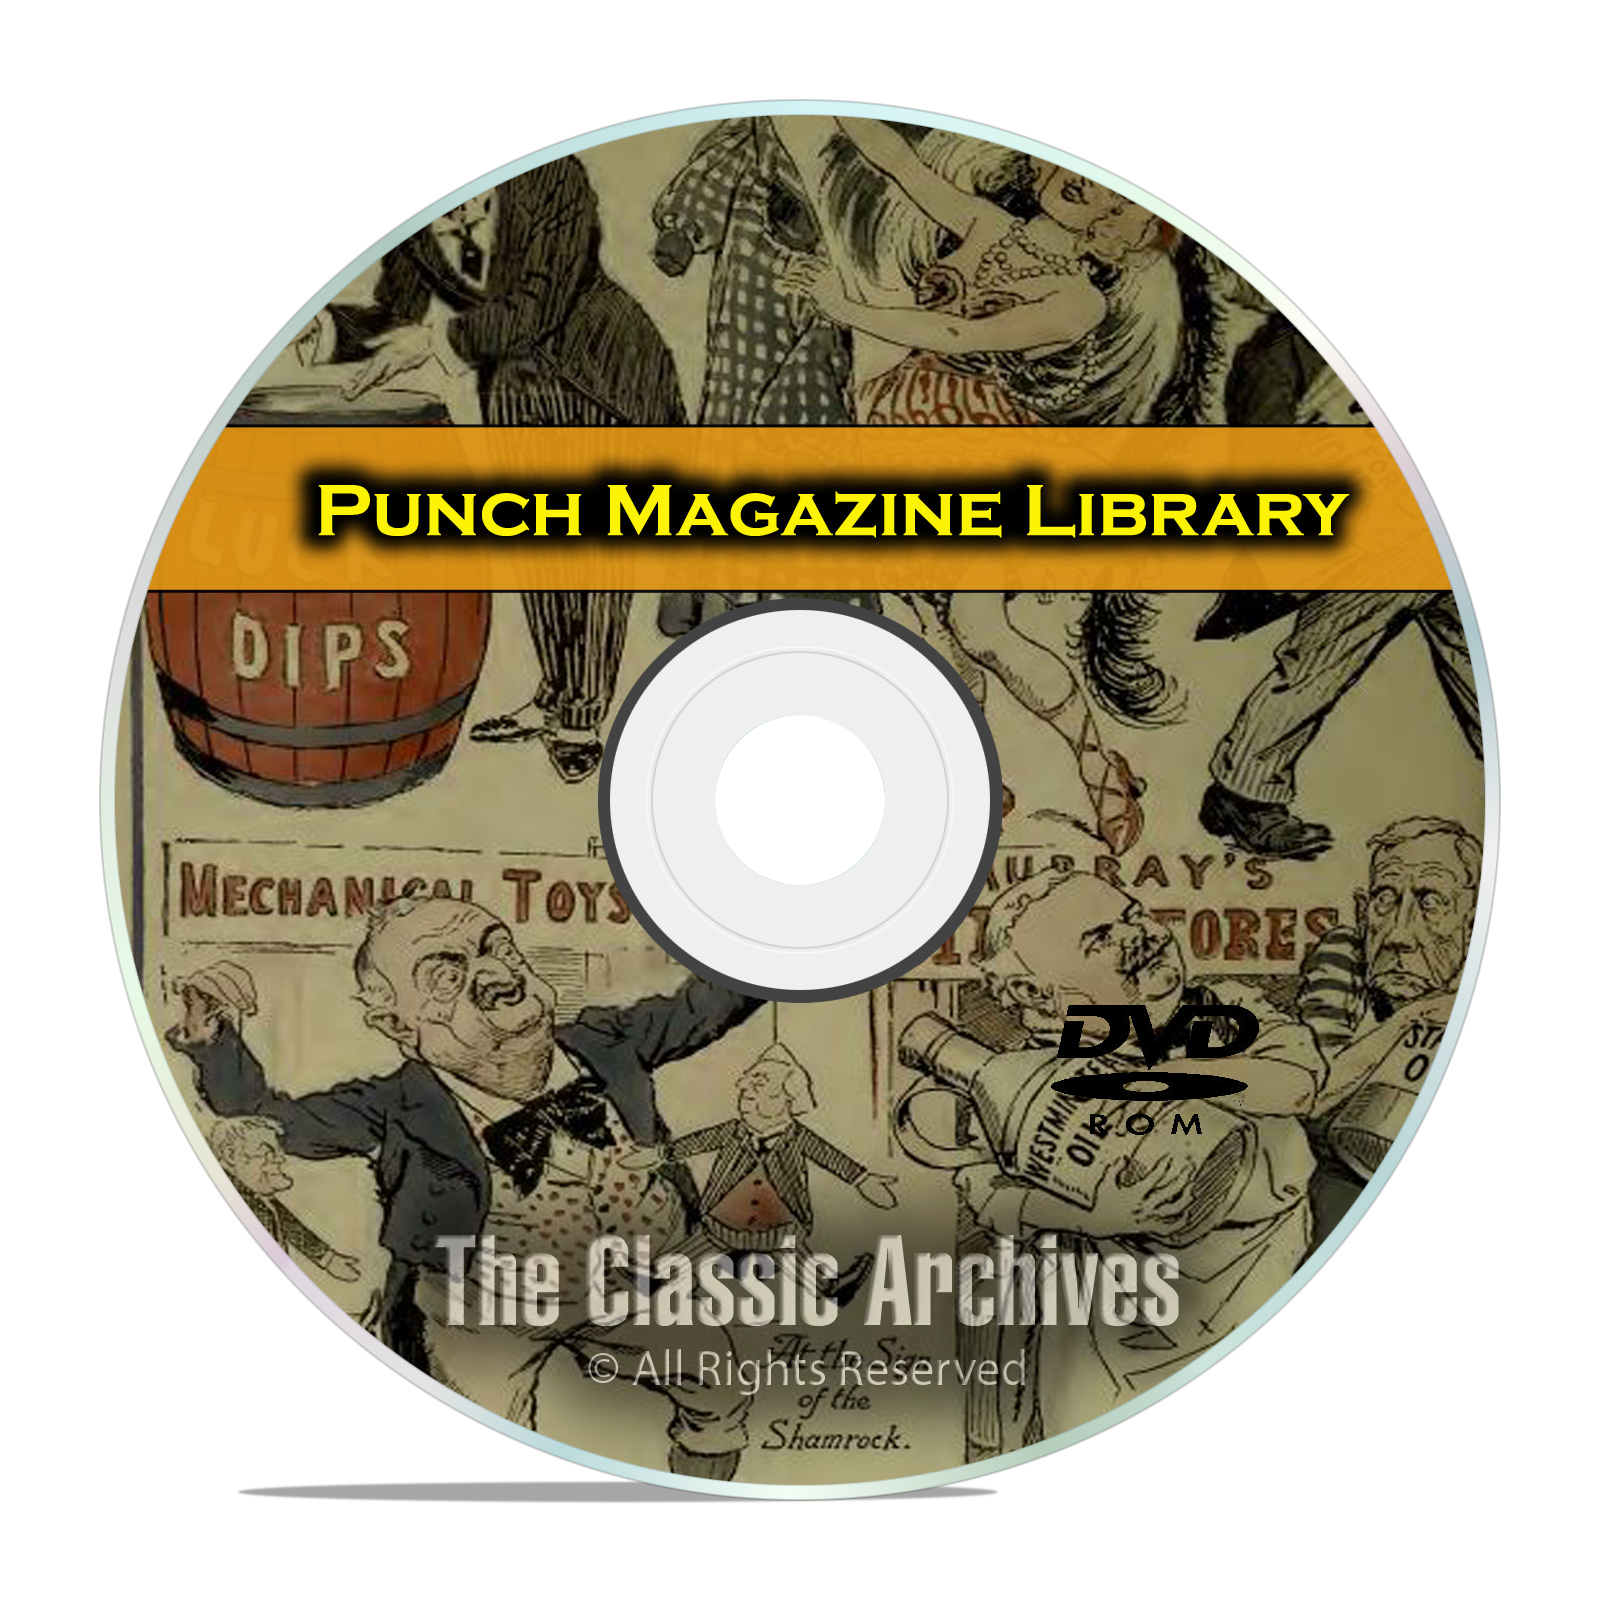 Punch Magazine, British Humor Comics Satire, 78 Volumes, 2028 Issues DVD